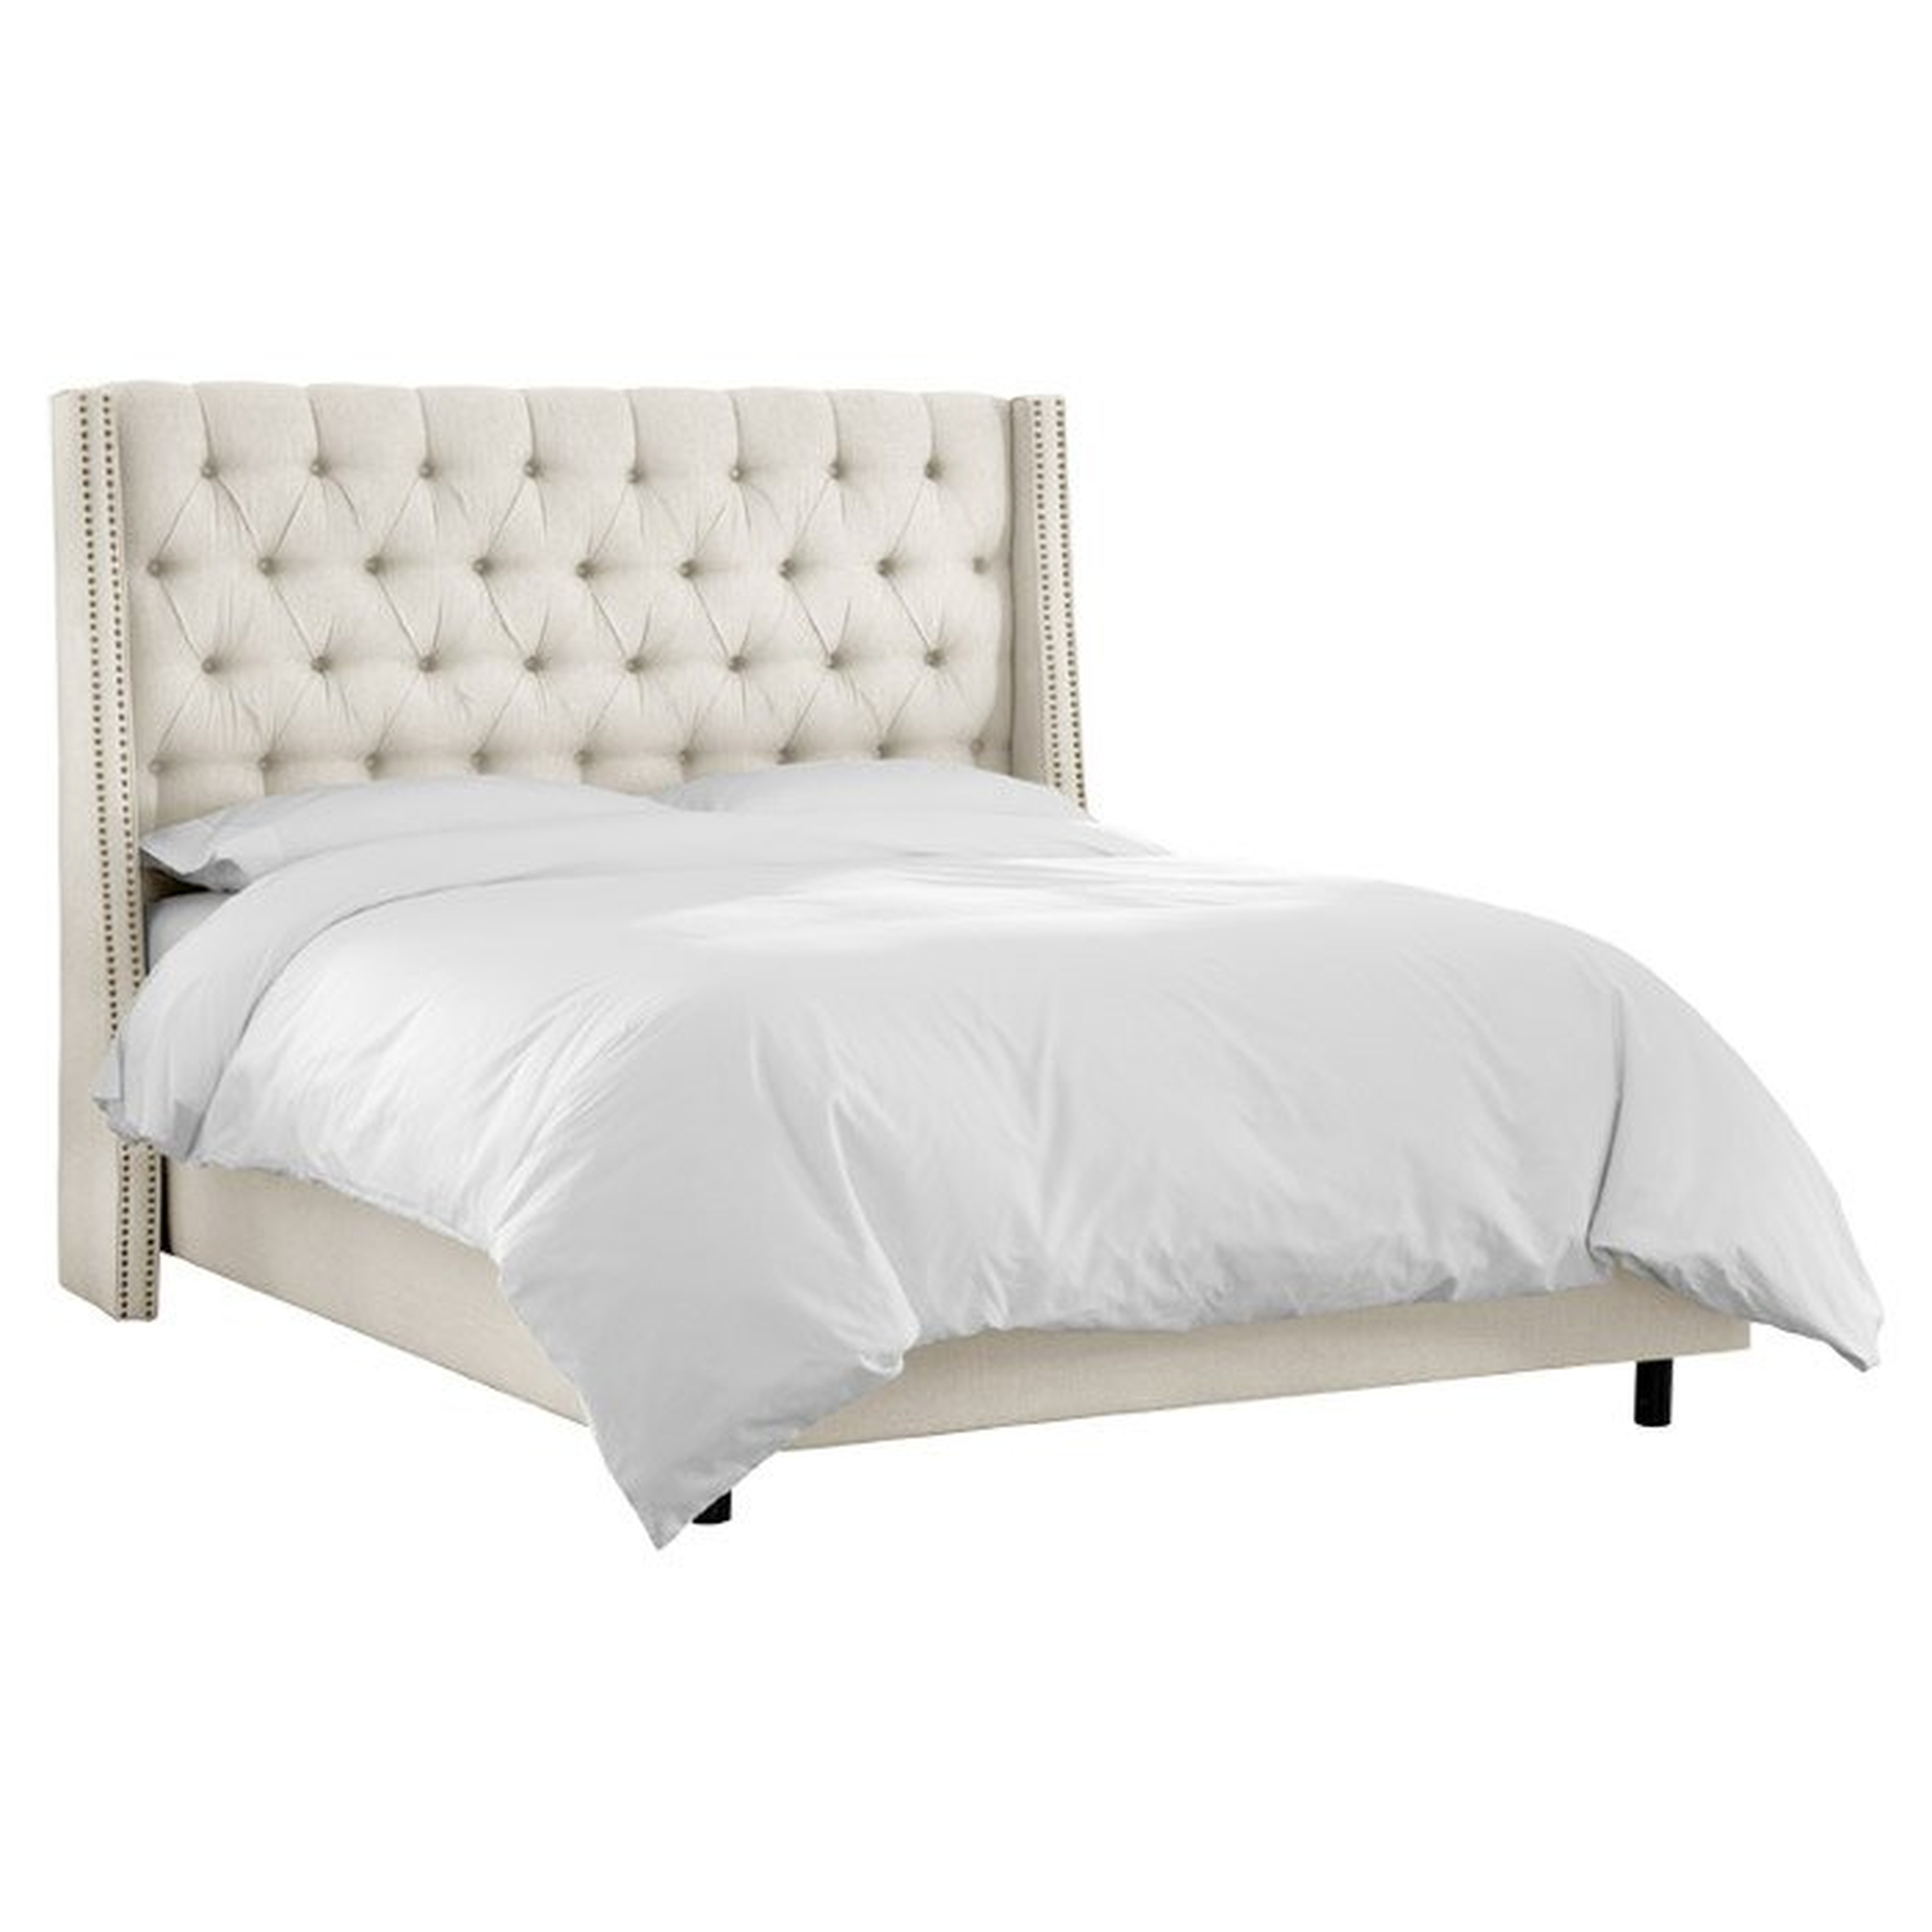 Tufted Upholstered Low Profile Standard Bed, King - Wayfair